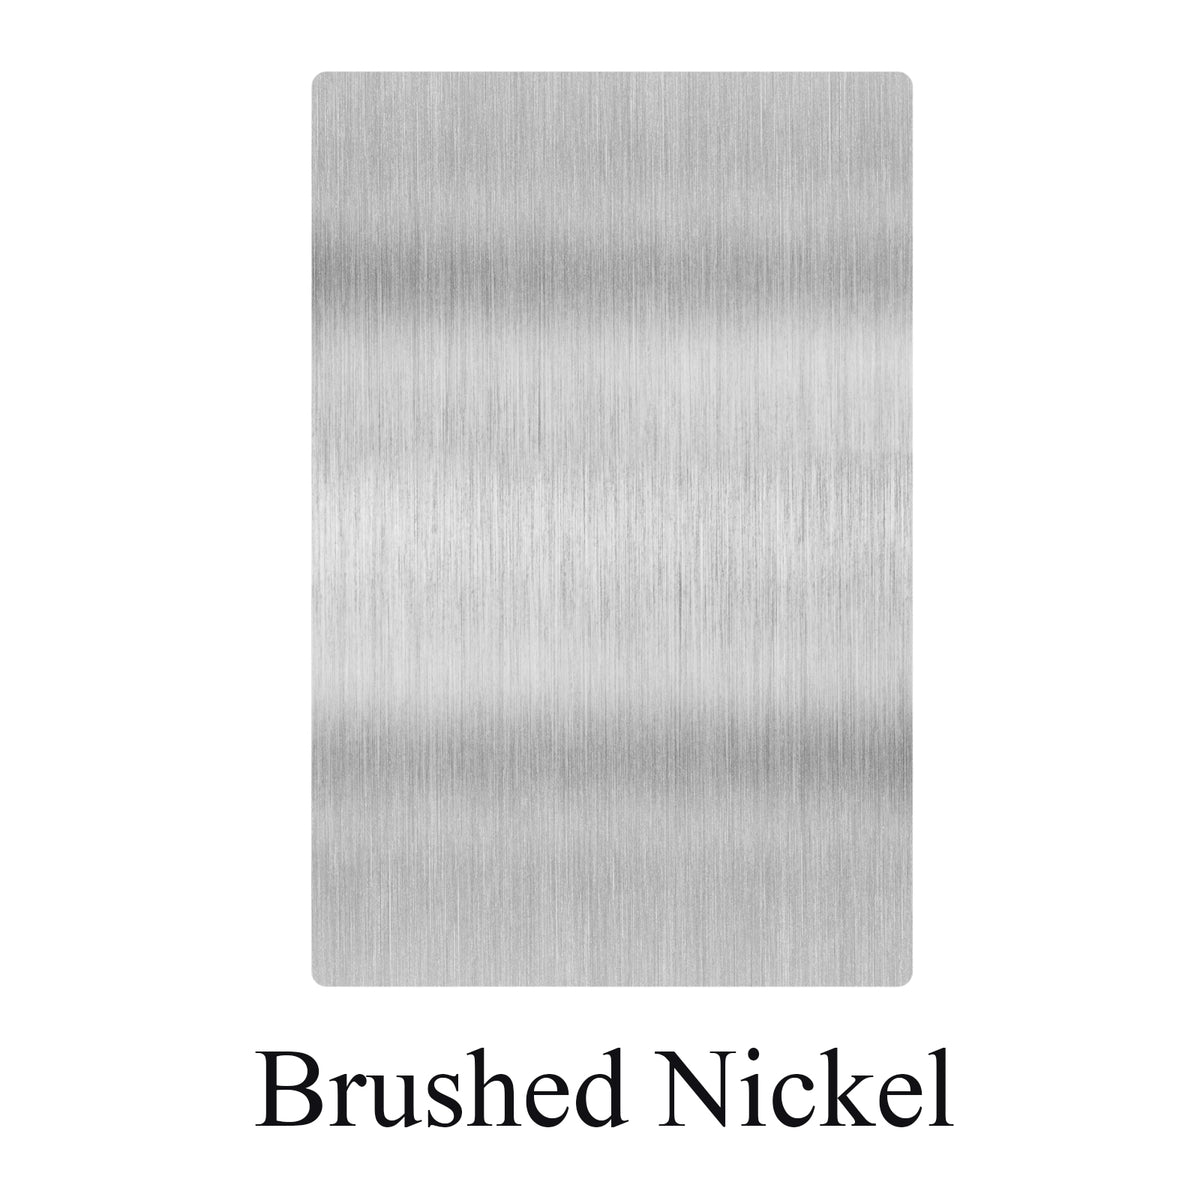 Akicon Brushed Nickel Stainless Steel Sample